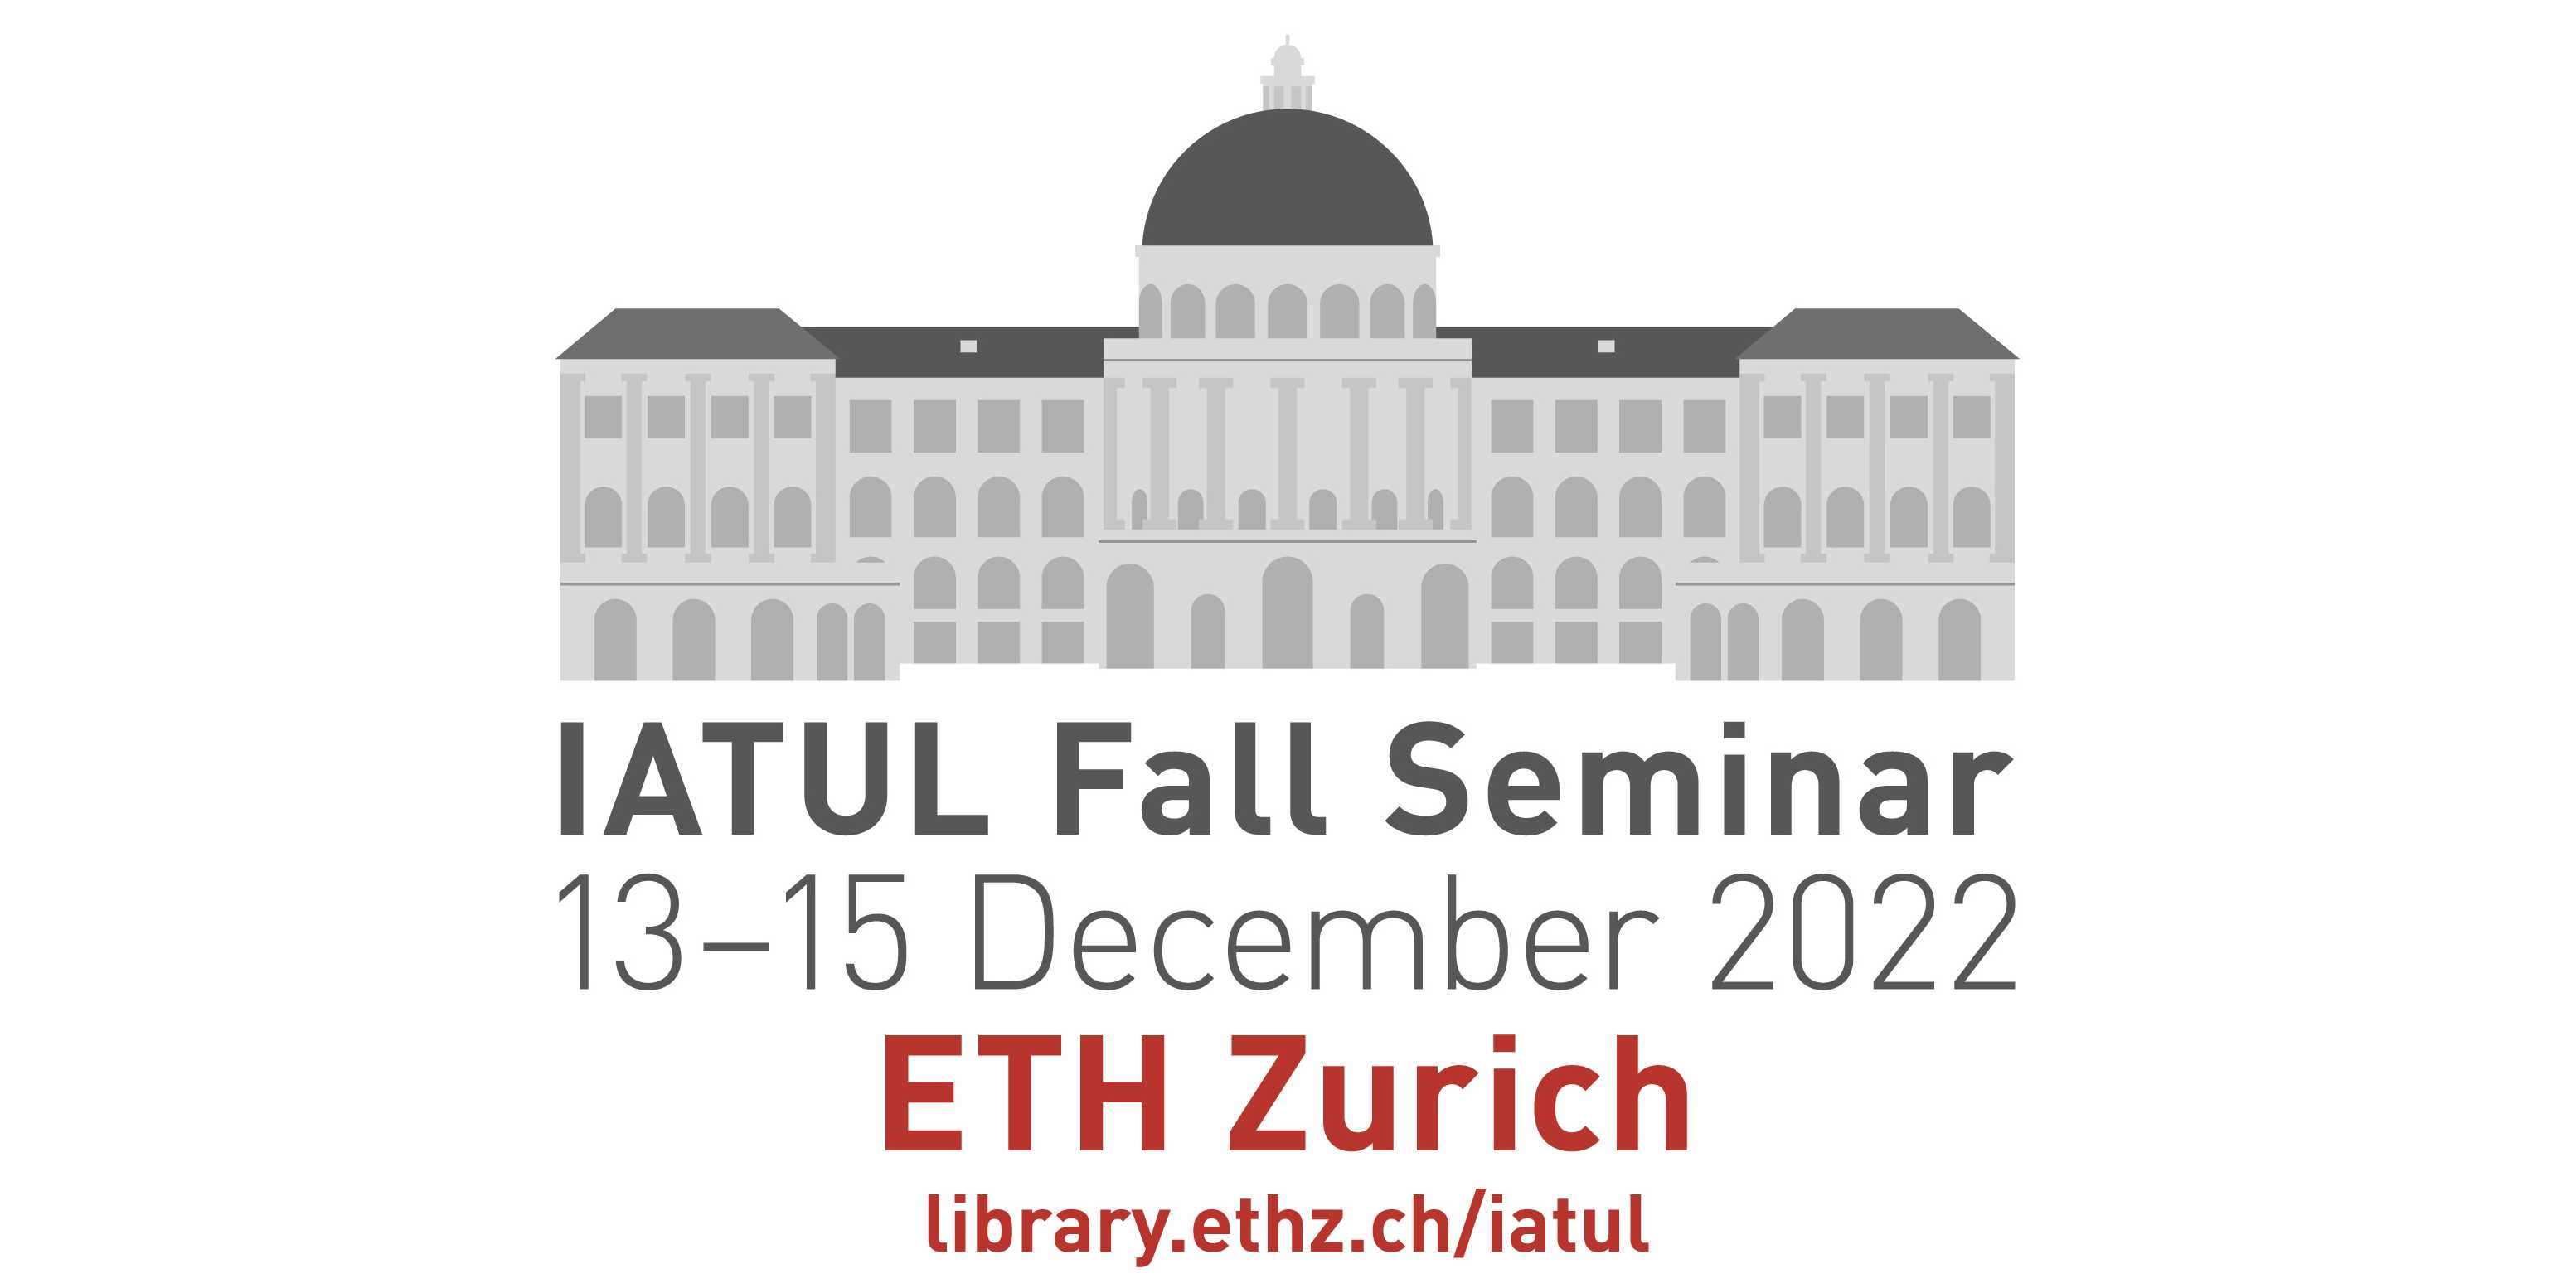 Save the Date: IATUL Fall Seminar 2022 